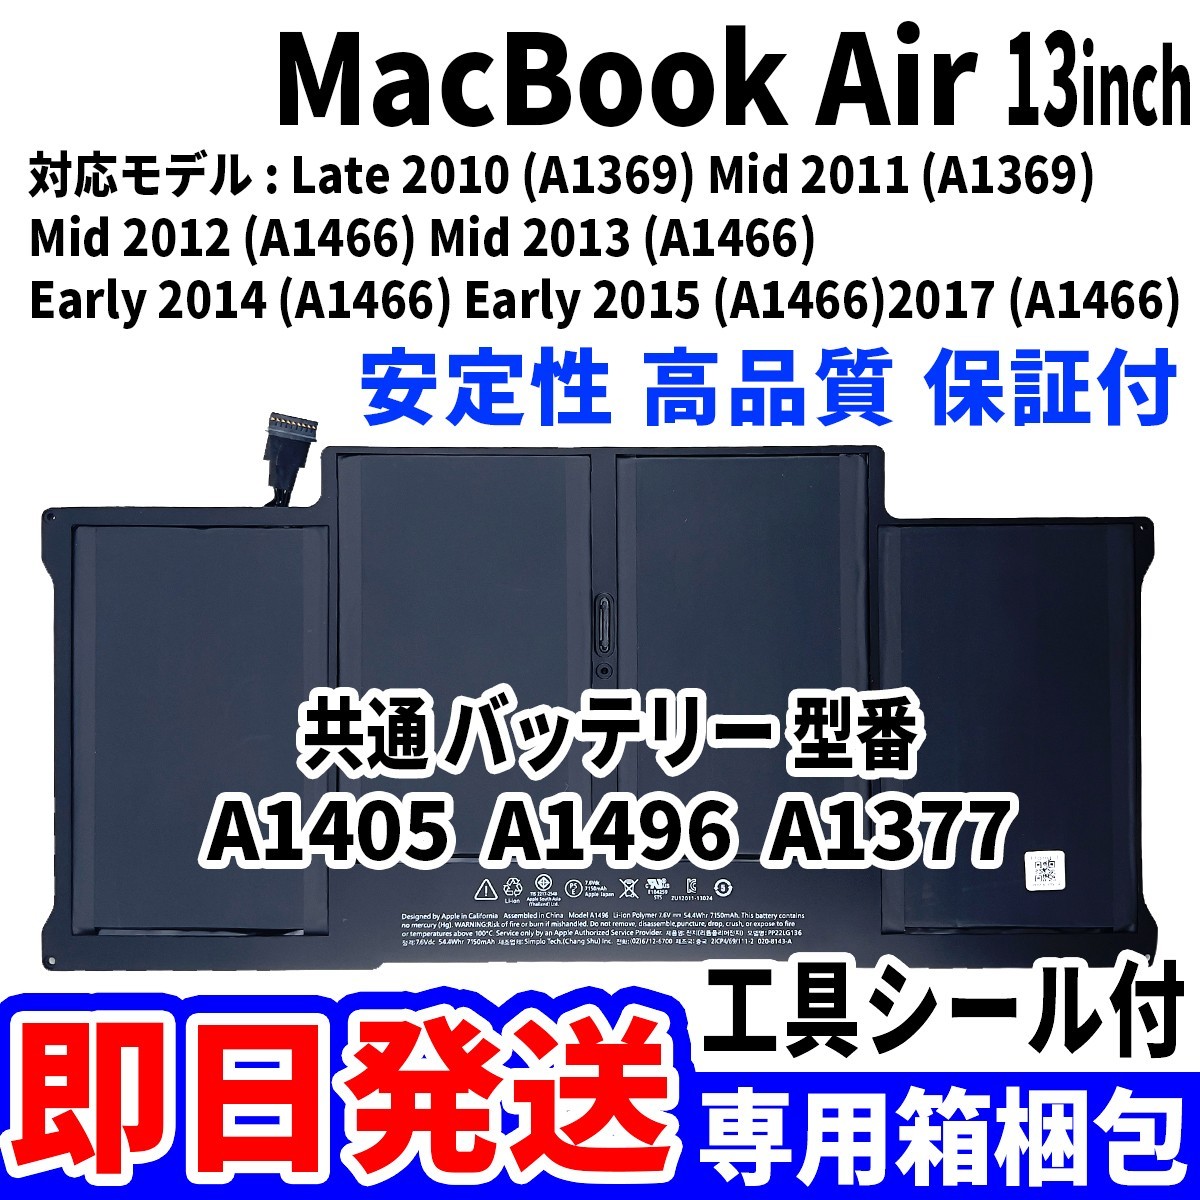 Yahoo!オークション -「macbook air 13 2010」(パソコン) の落札相場